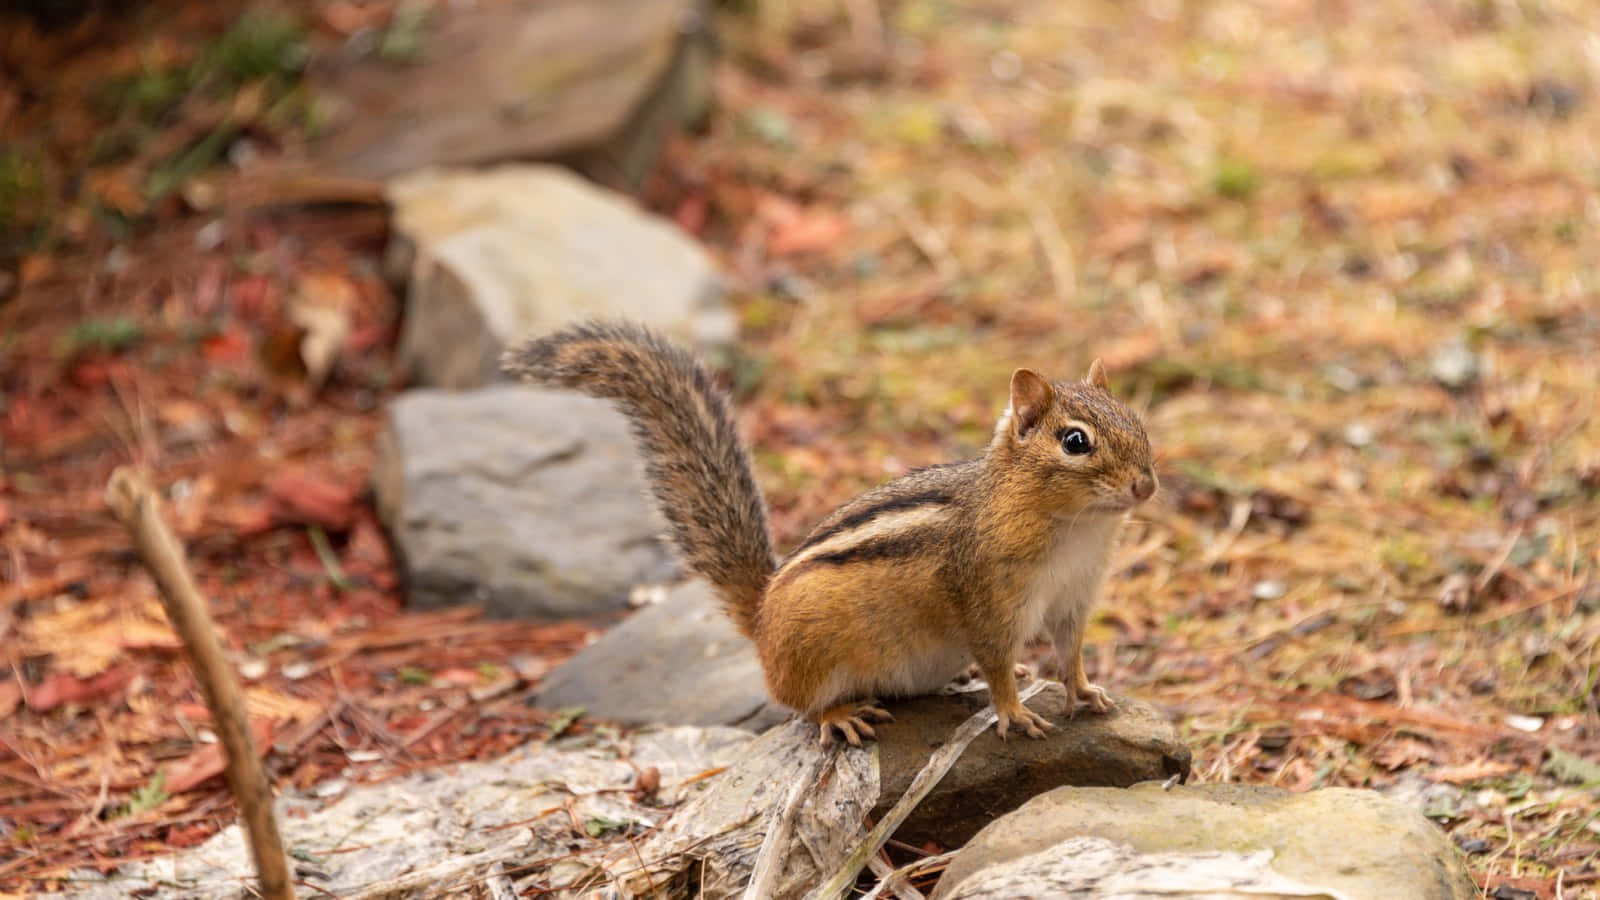 A cute chipmunk nibbling on a nut